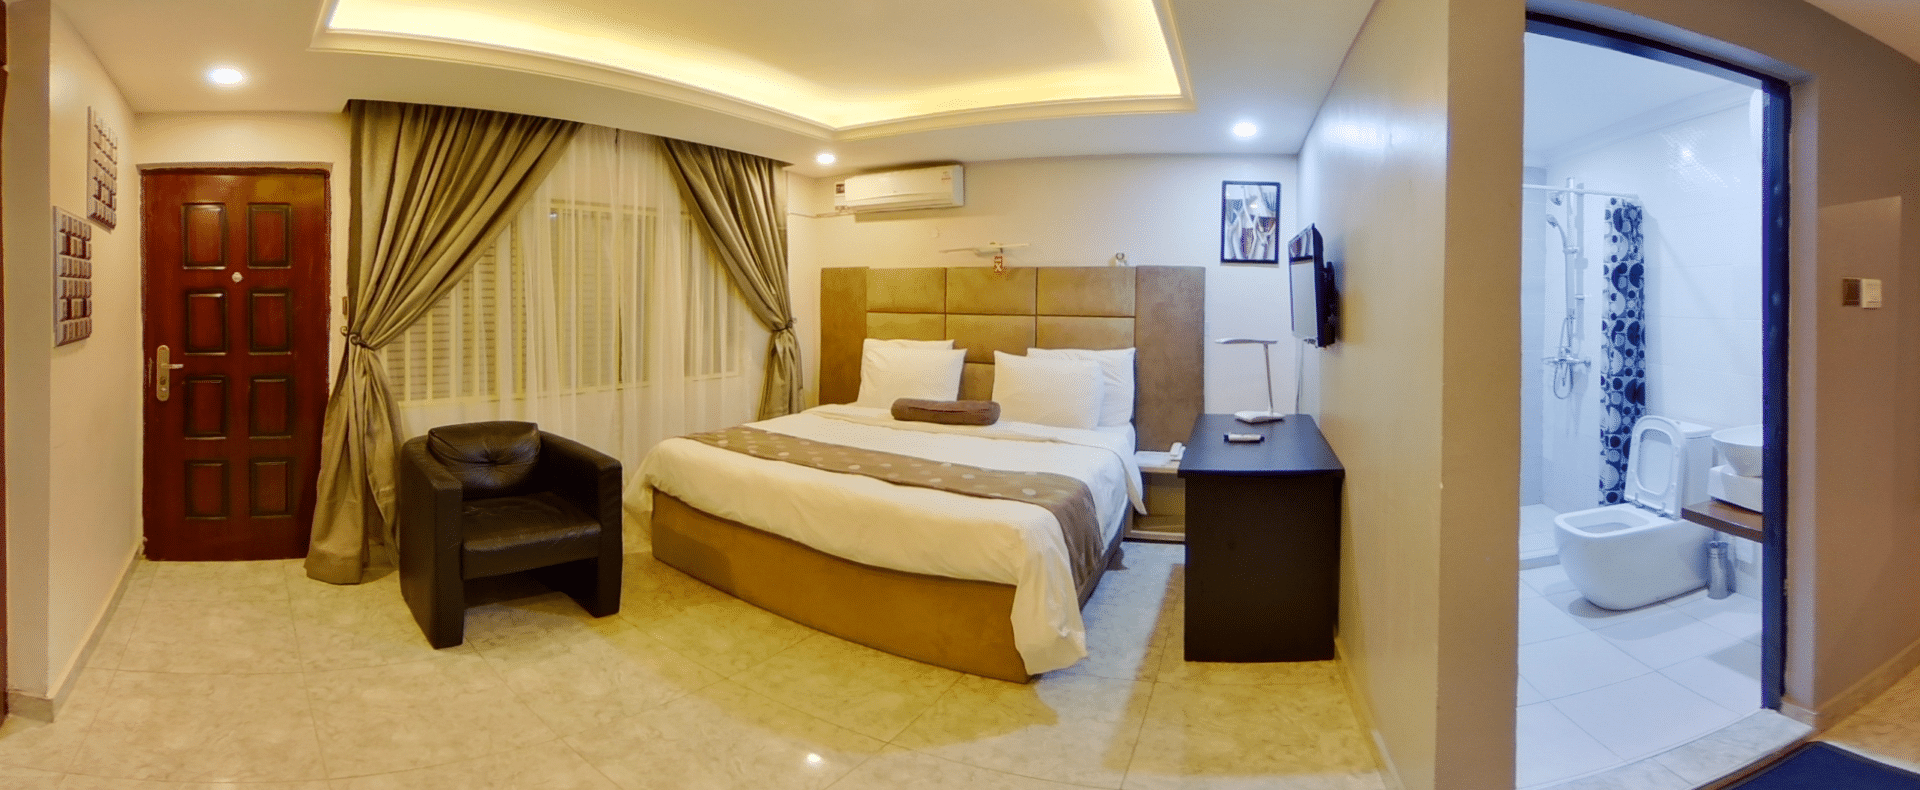 Hotel Super Deluxe For Booking In Abuja Nigeria